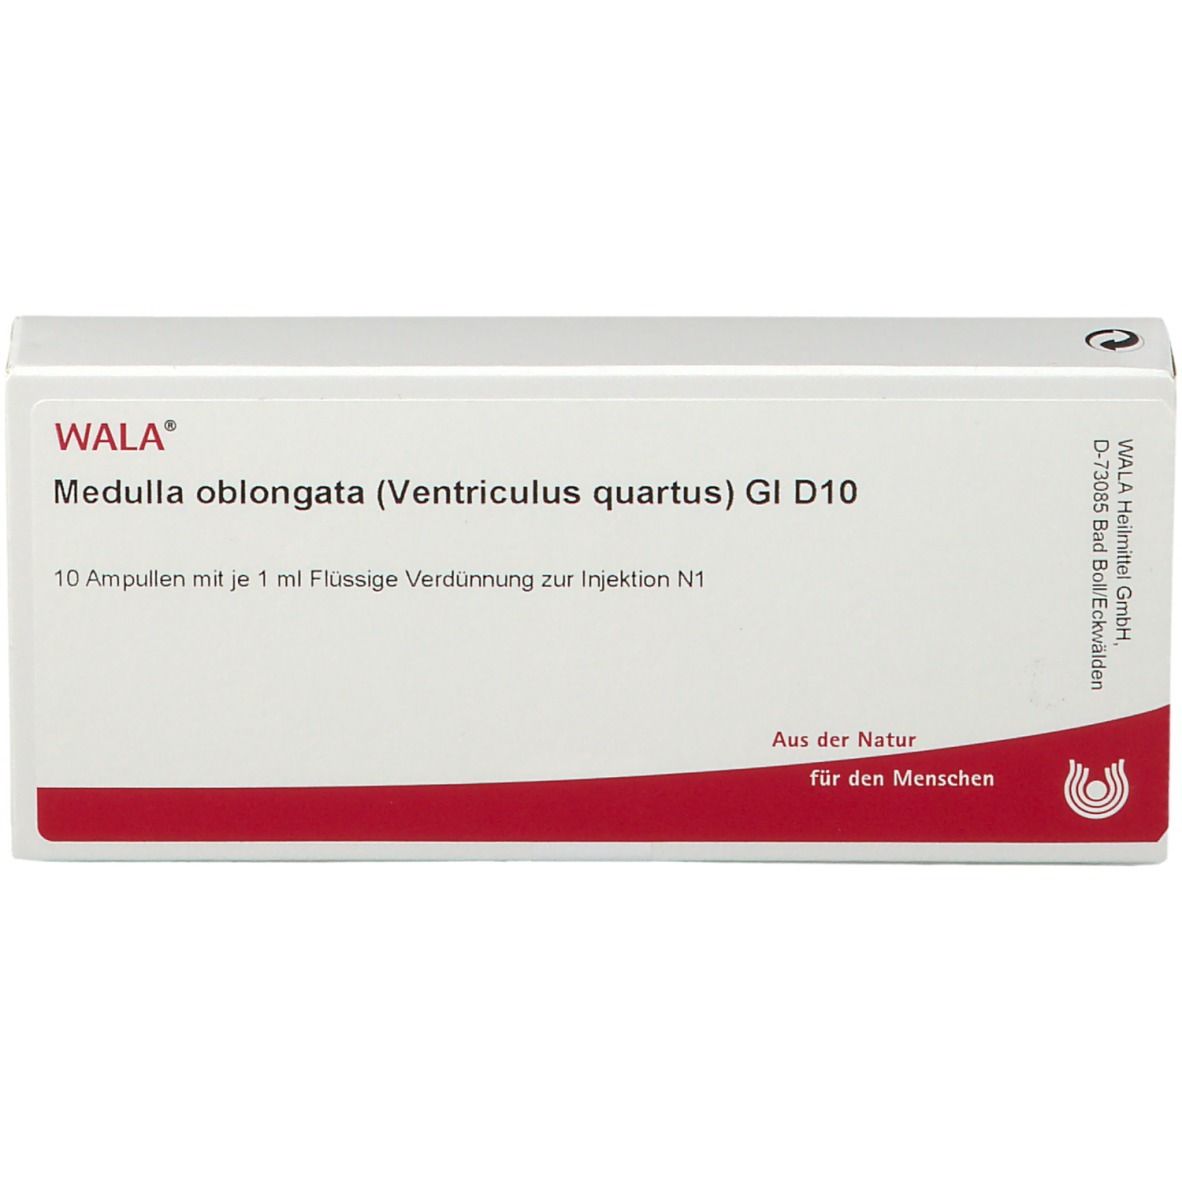 WALA® Medulla oblongata Ventriculus quartus Gl D 10